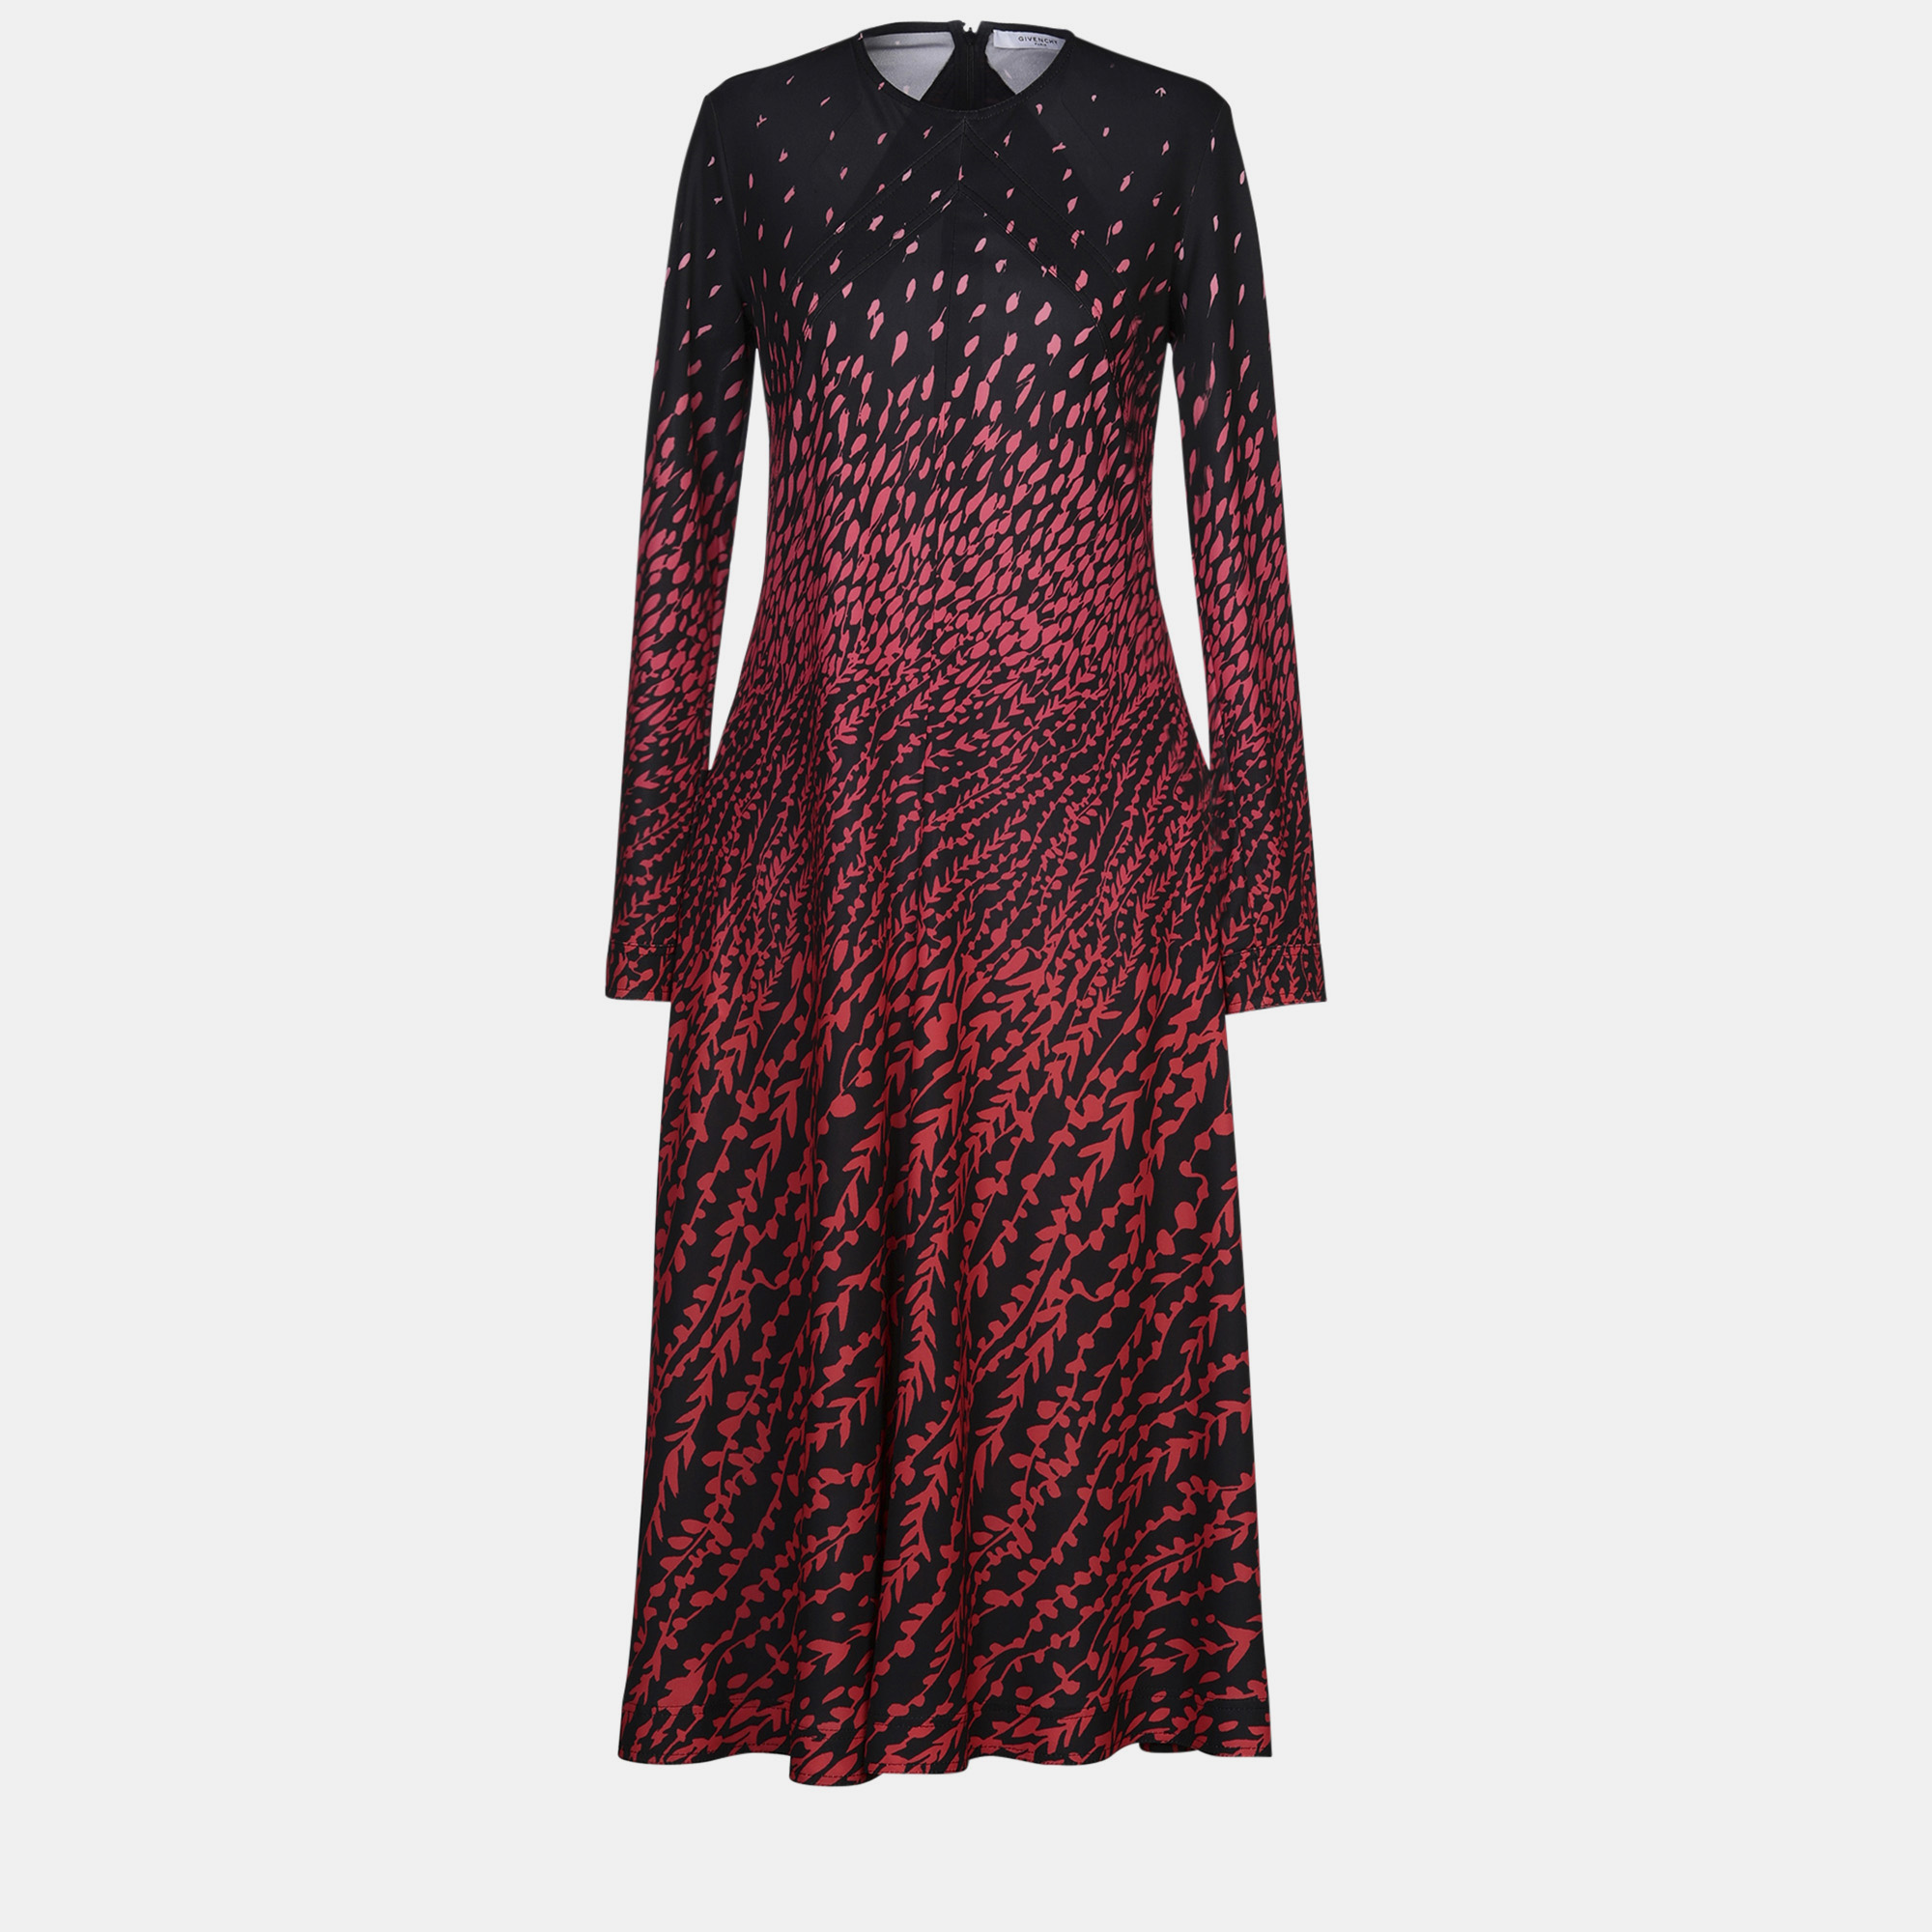 Givenchy red/black printed crepe midi dress m (fr 38)